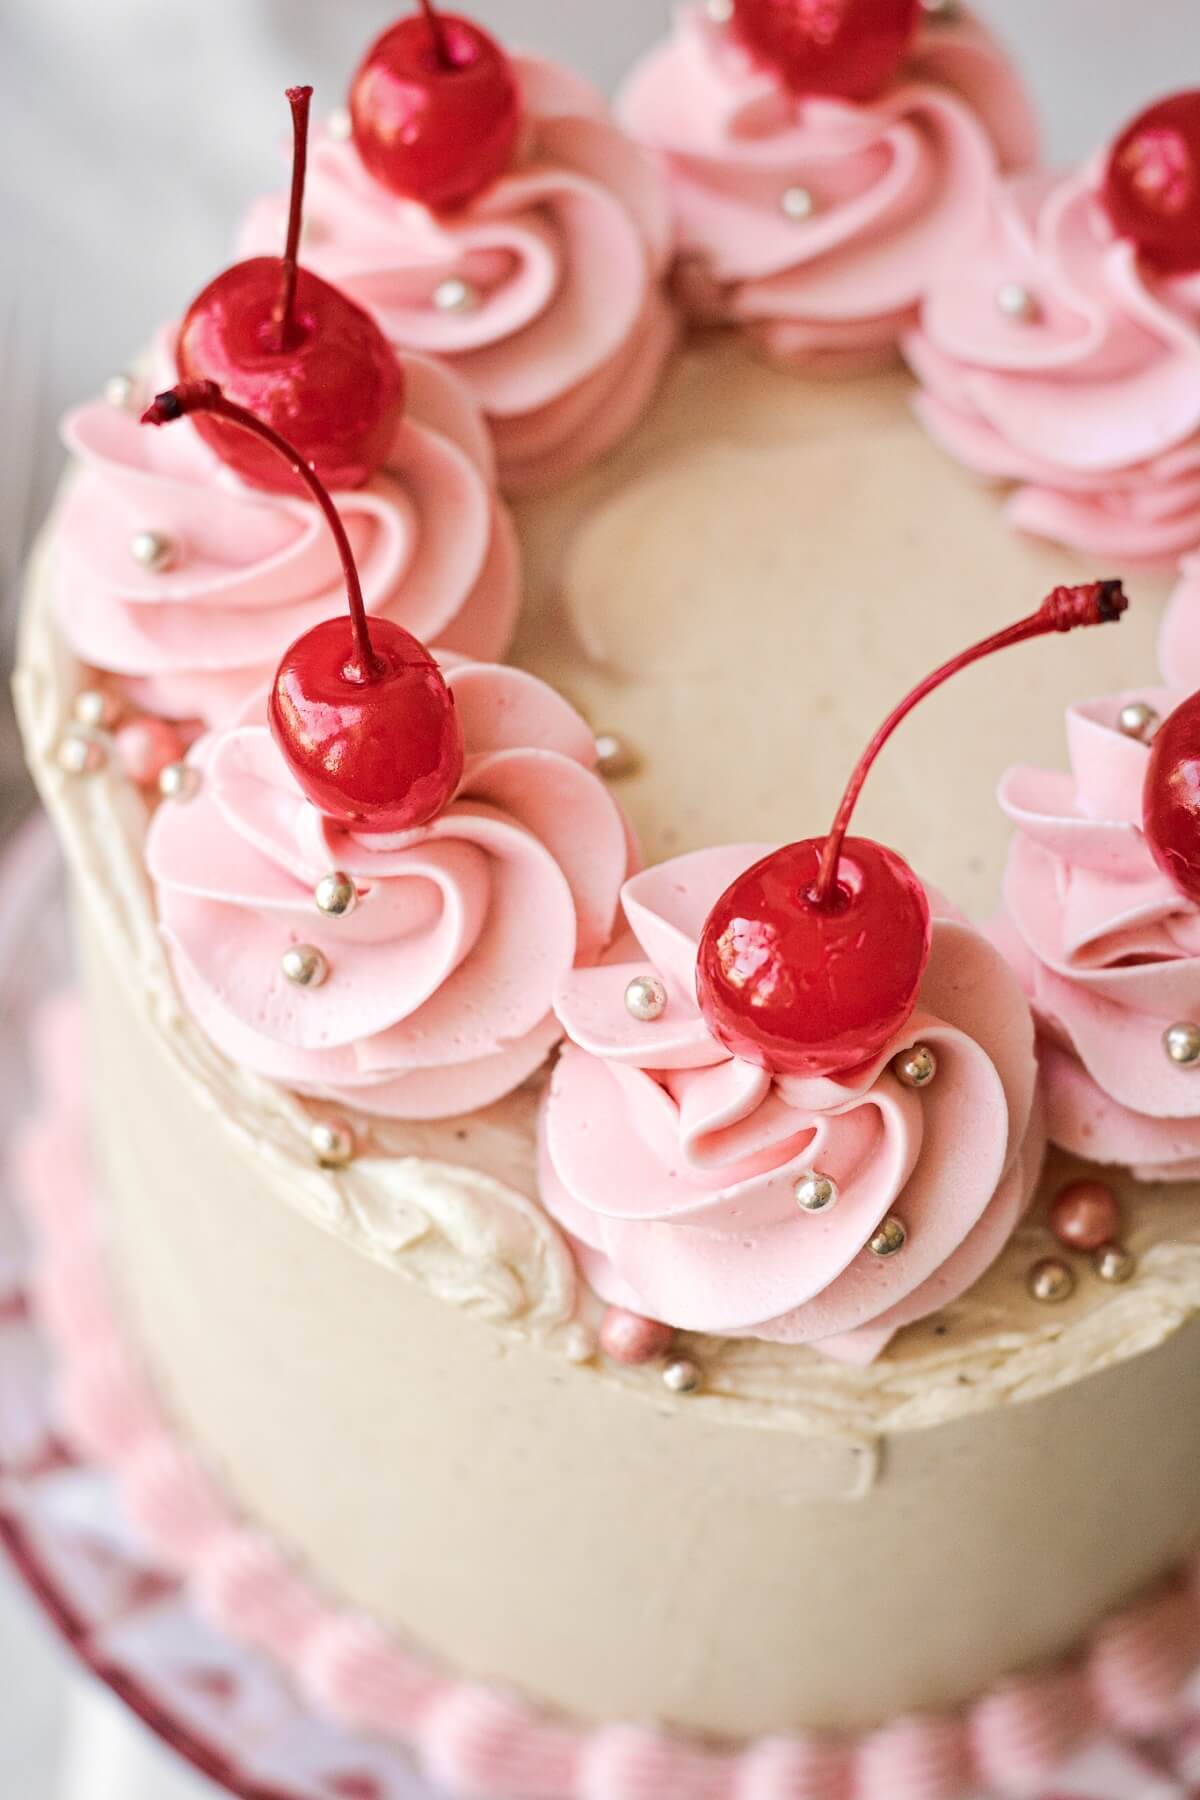 Maraschino cherries and gold sugar pearls on a cherry pistachio layer cake.